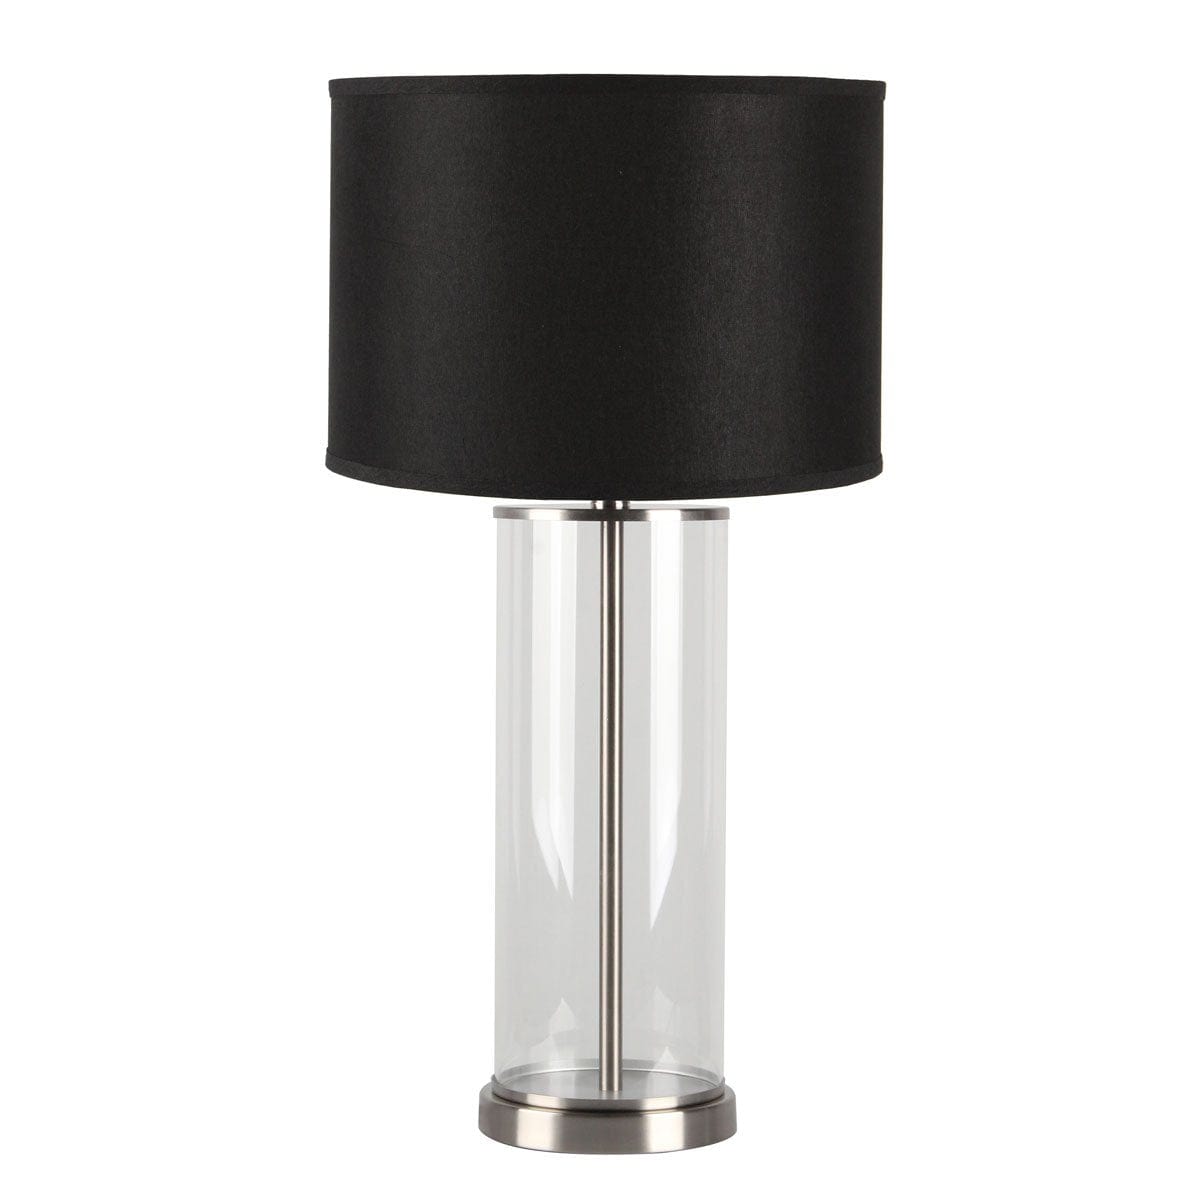 CAFE LIGHTING & LIVING Table Lamp Left Bank Table Lamp - Nickel w Black Shade B12263